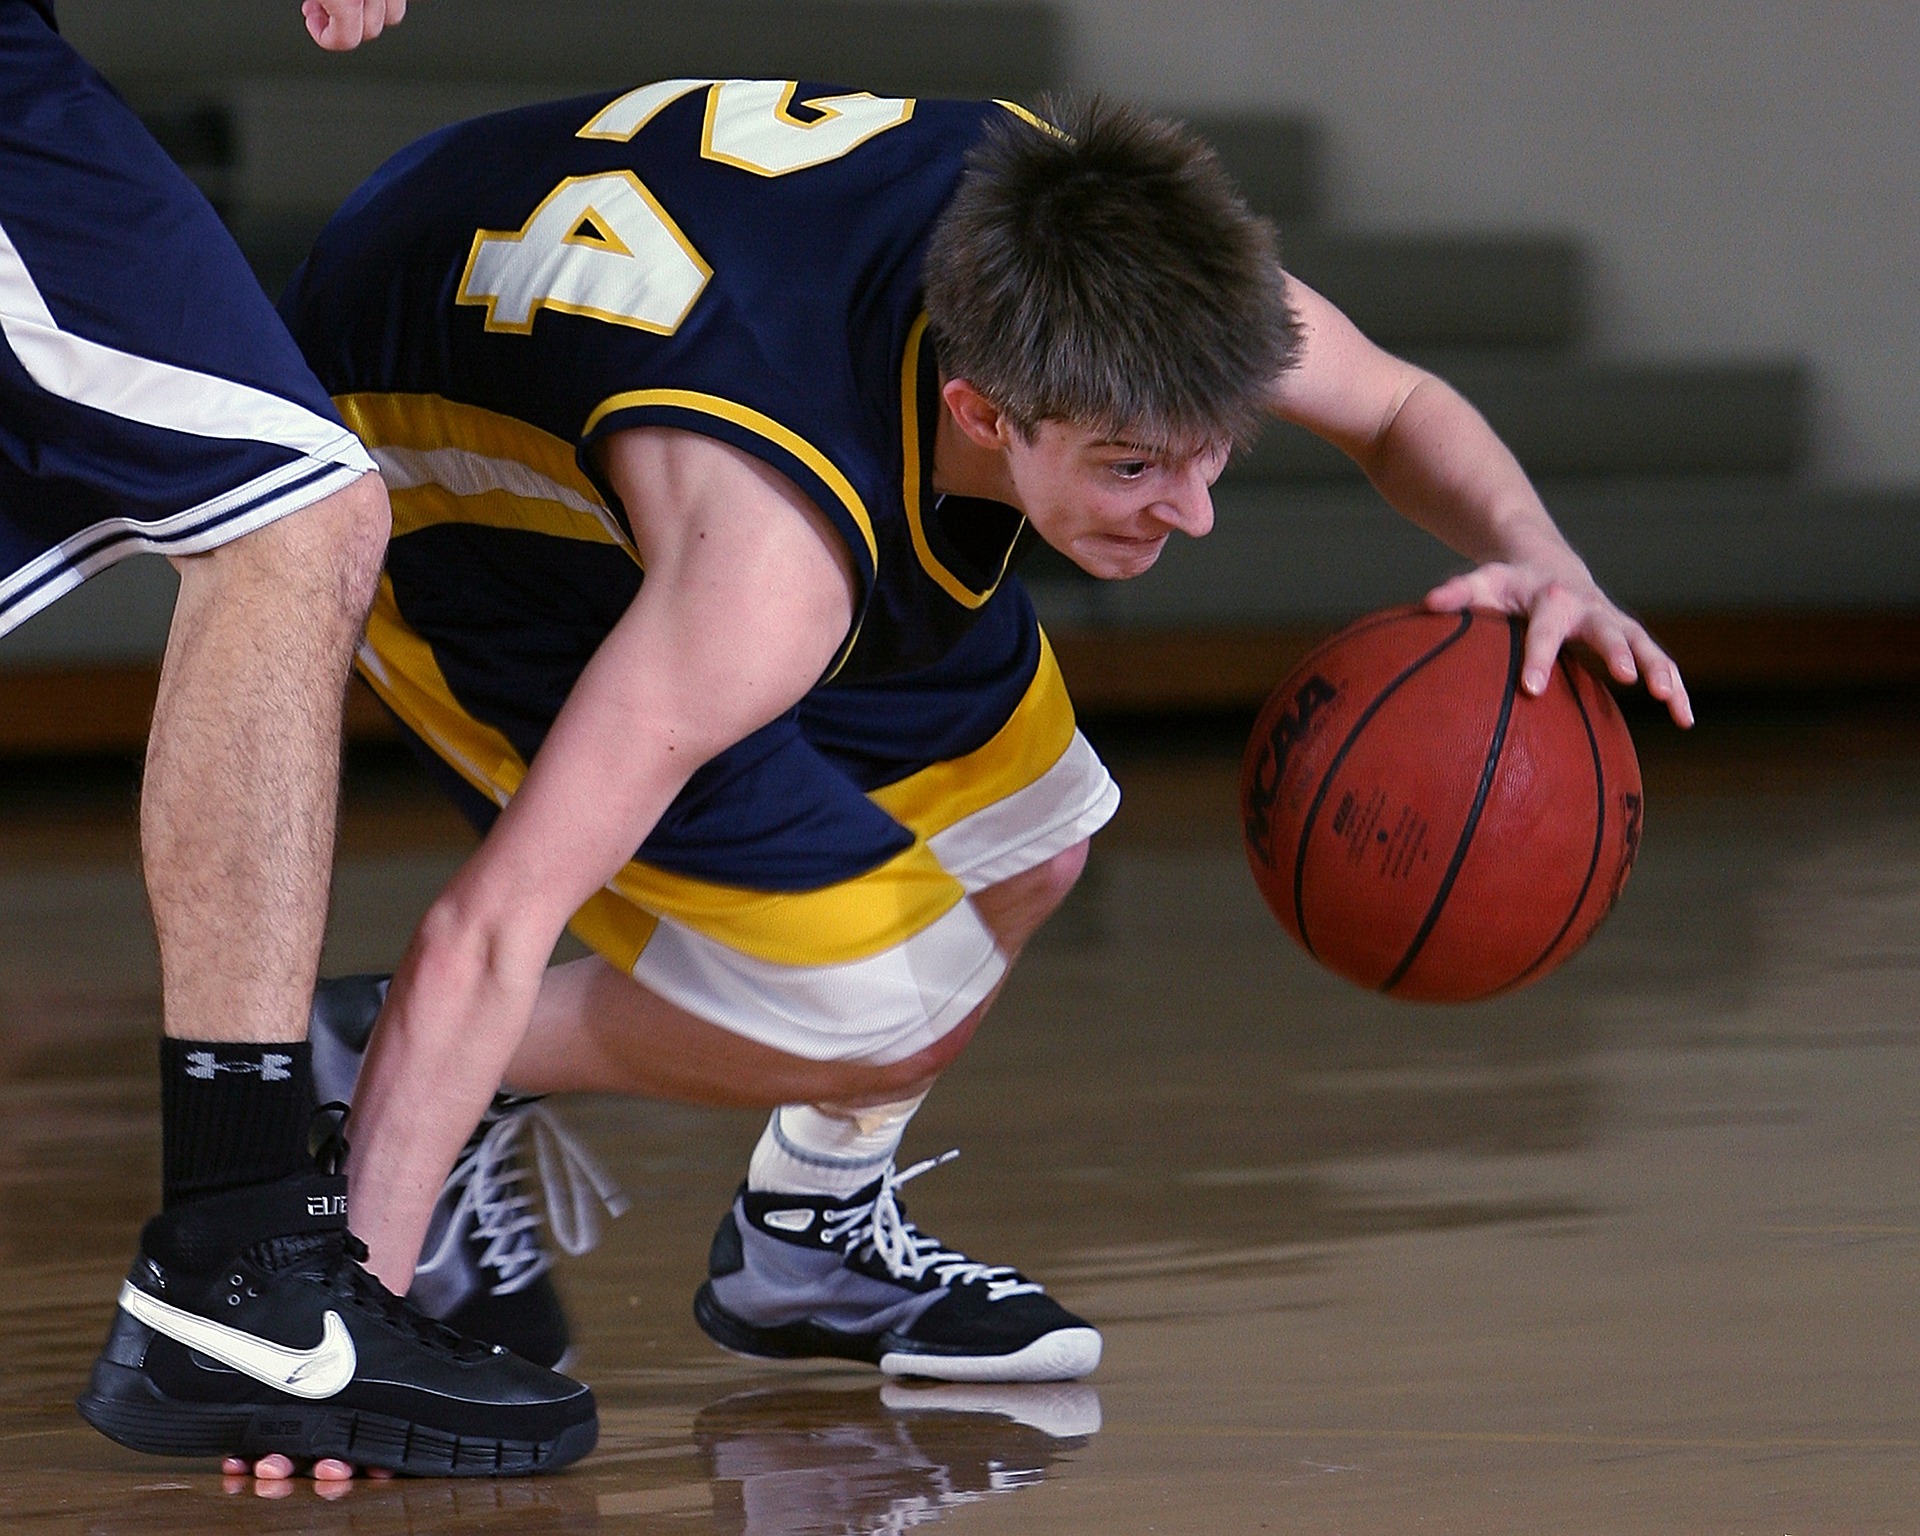 Basketball player slipping